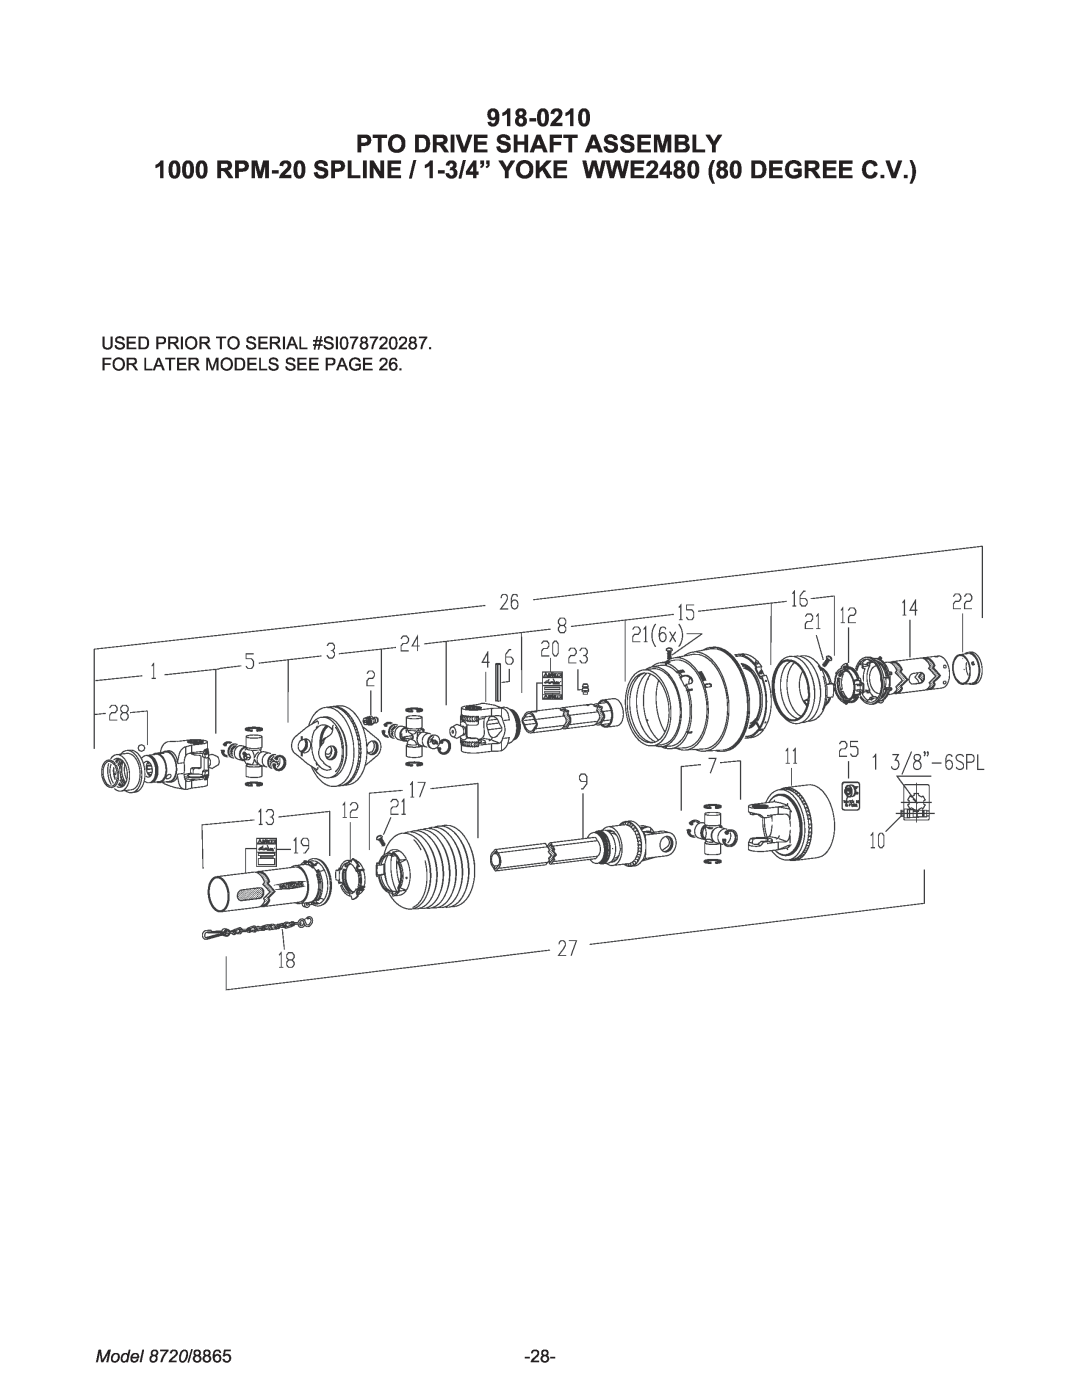 Meyer manual Pto Drive Shaft Assembly, RPM-20 SPLINE / 1-3/4” YOKE WWE2480 80 DEGREE C.V, Model 8720/8865 